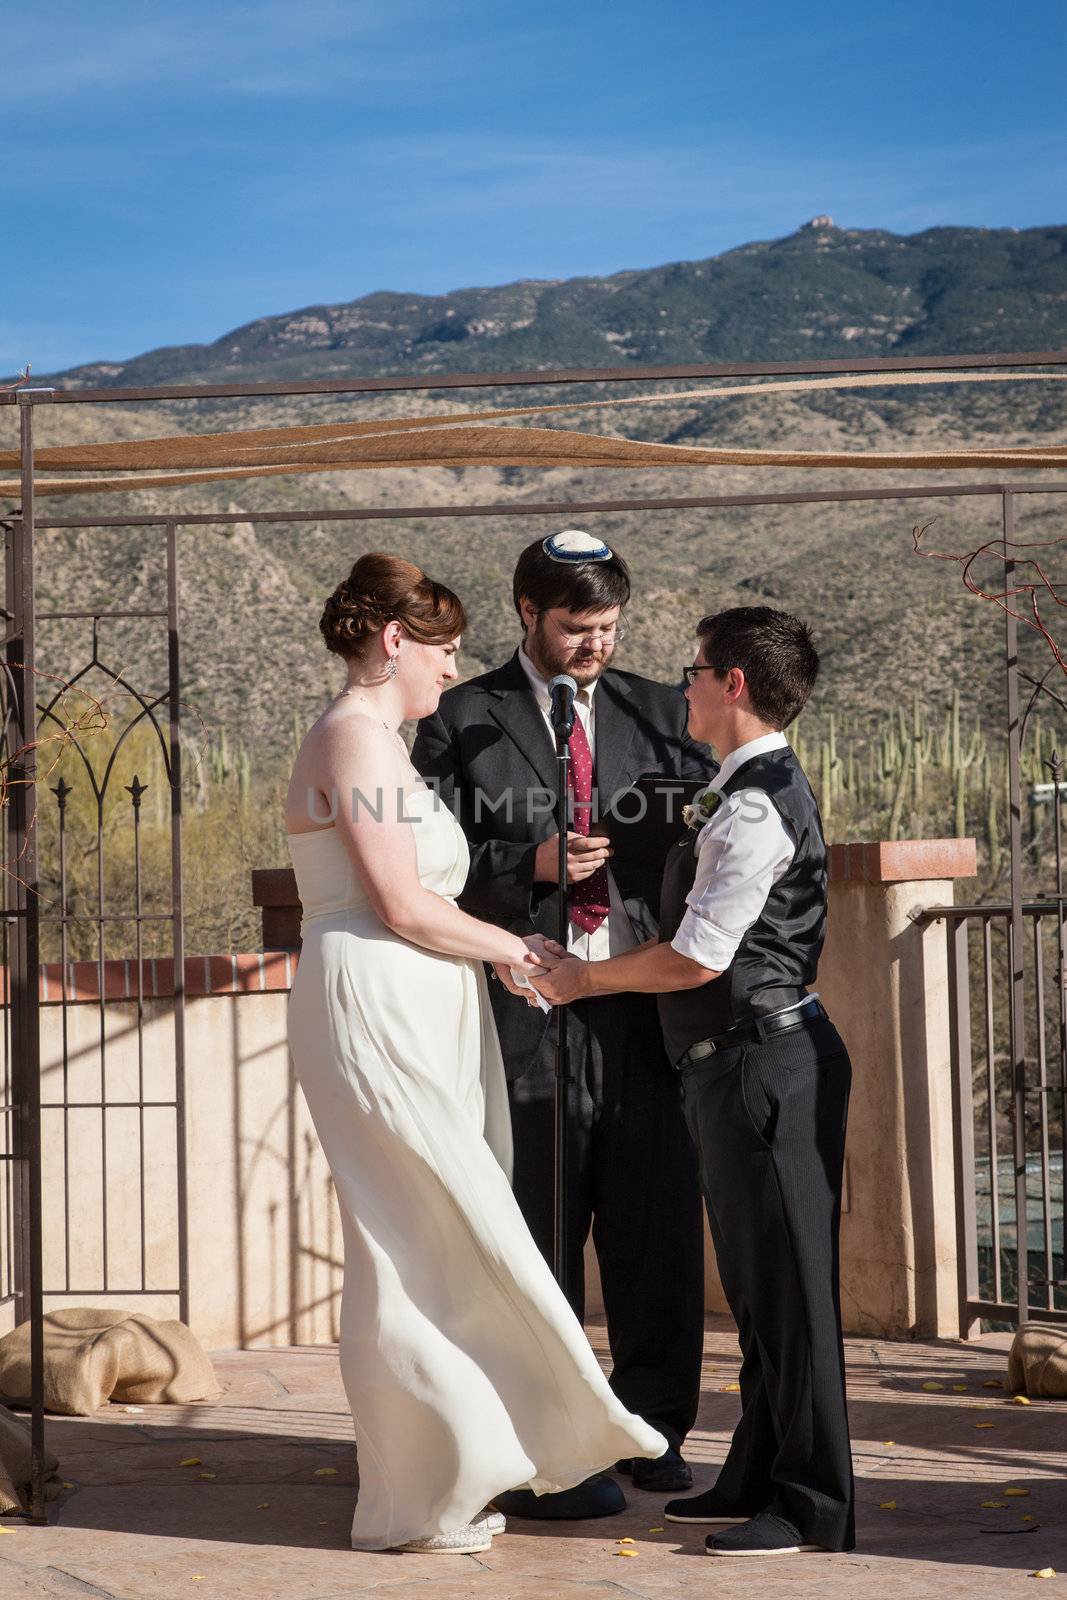 Rabbi reading sacrament for happy lesbian couple marring outdoors